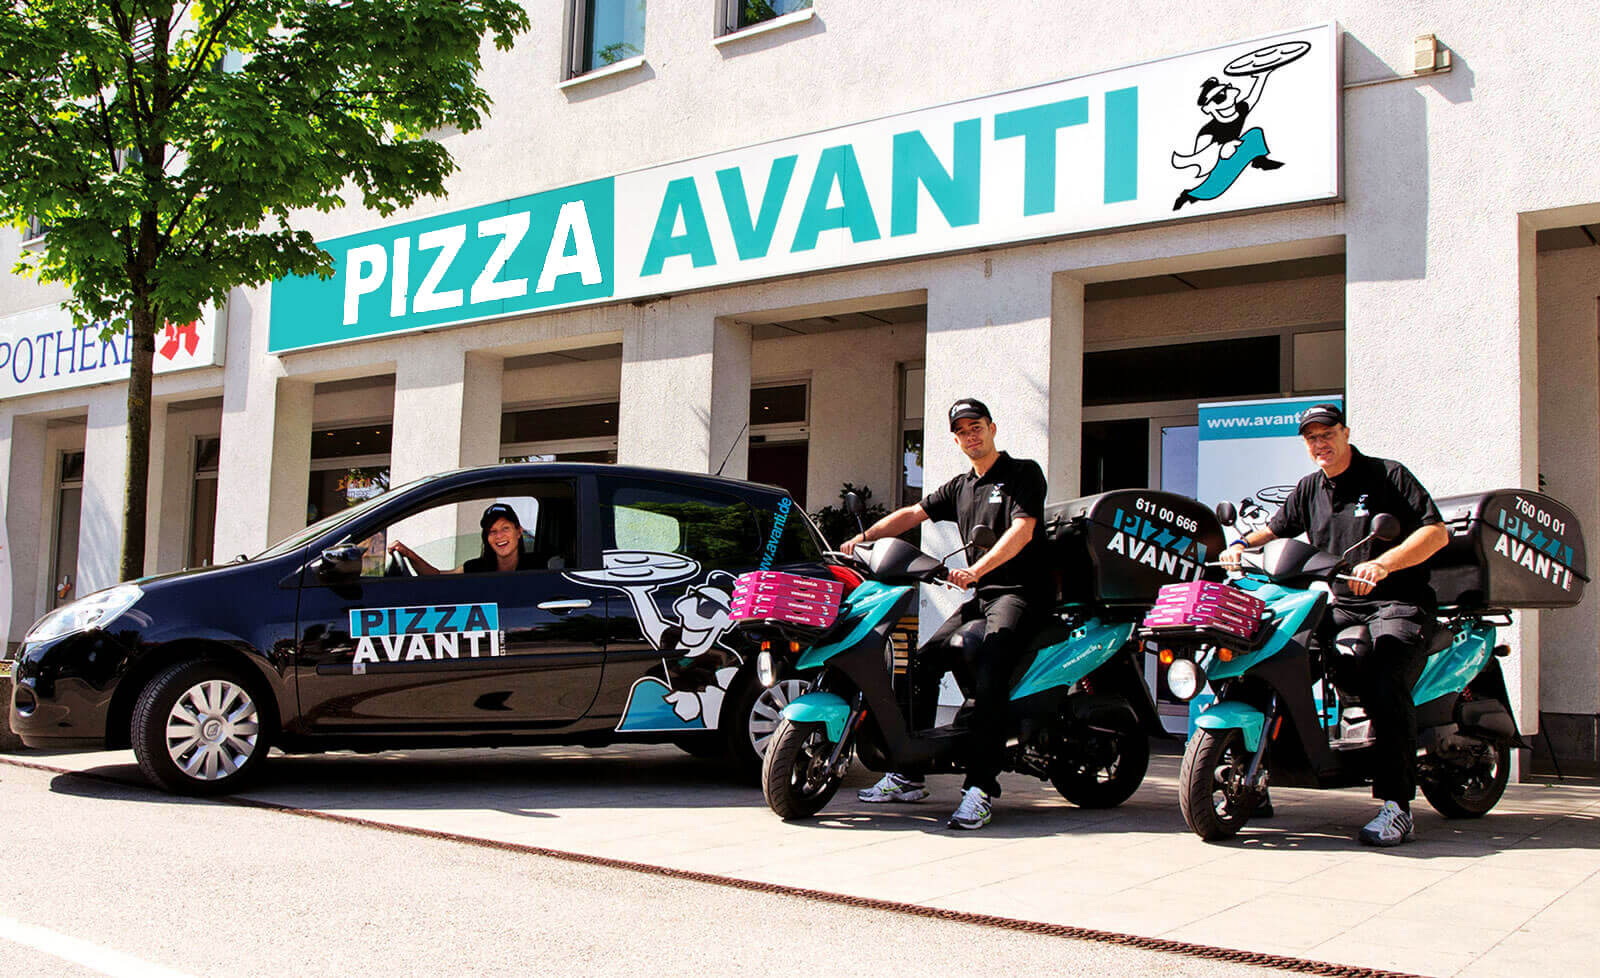 branding Pizza Avanti Fuhrpark nokidesign